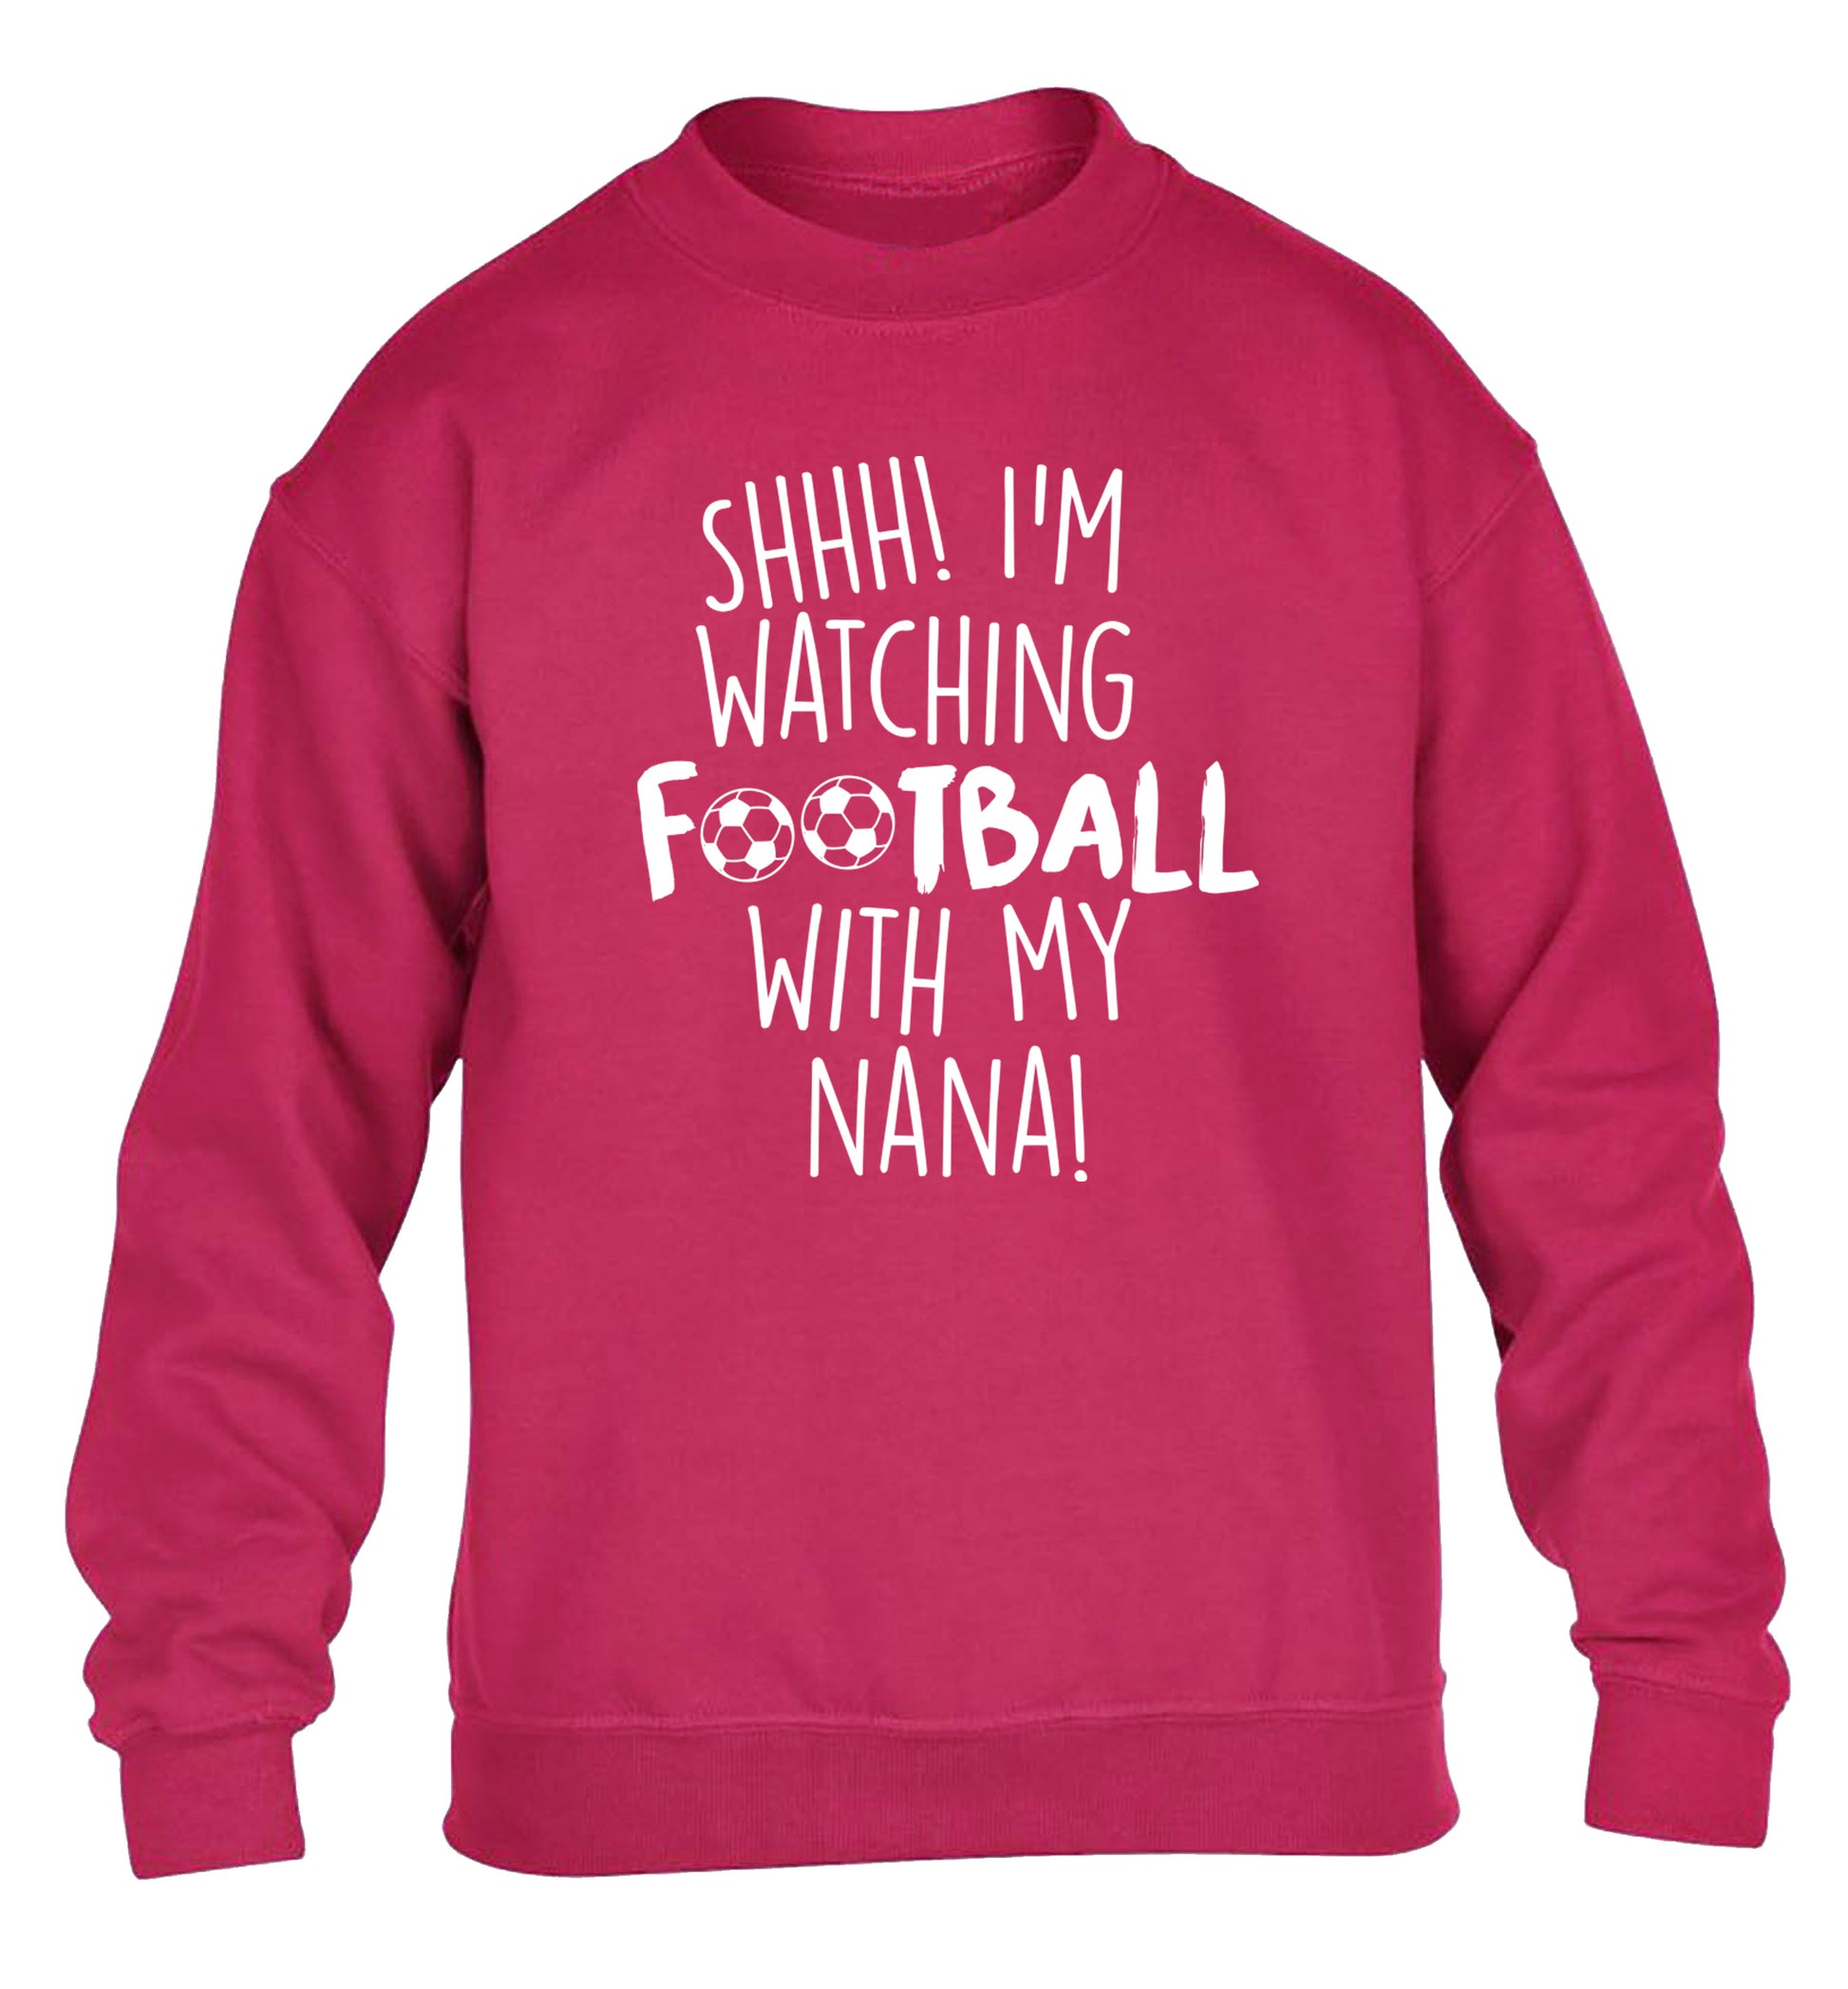 Shhh I'm watching football with my nana children's pink sweater 12-14 Years